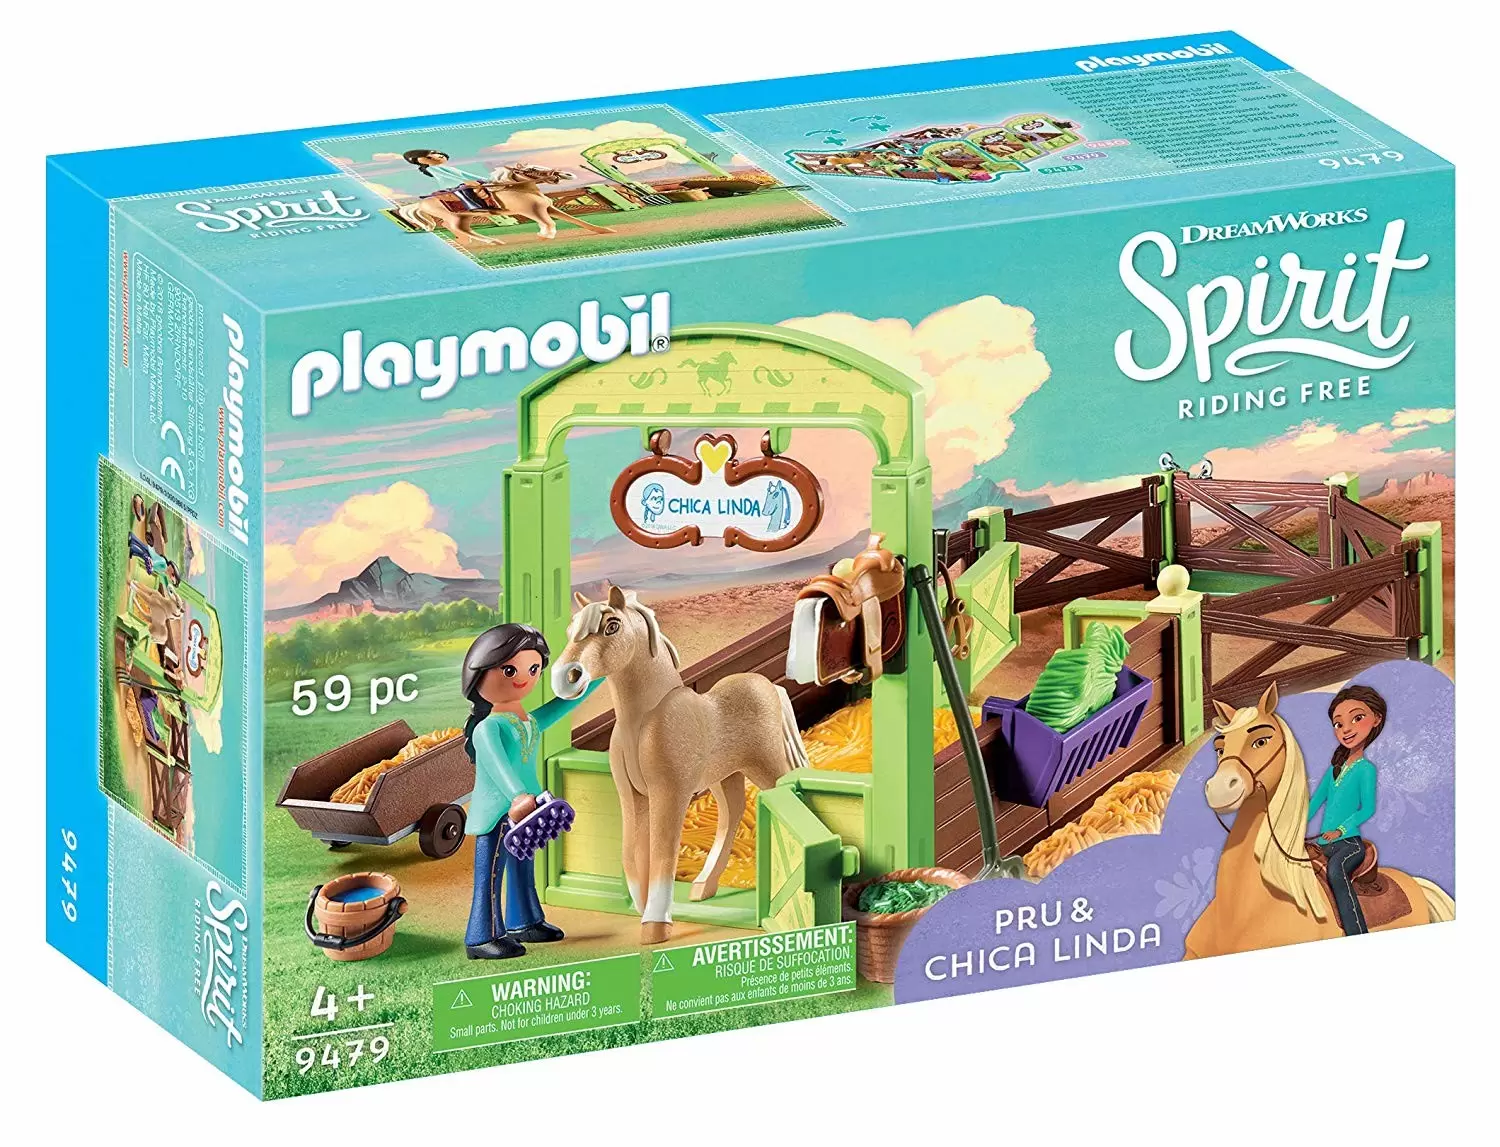 Playmobil Spirit Dreamworks - Box de Pru & Chica Linda